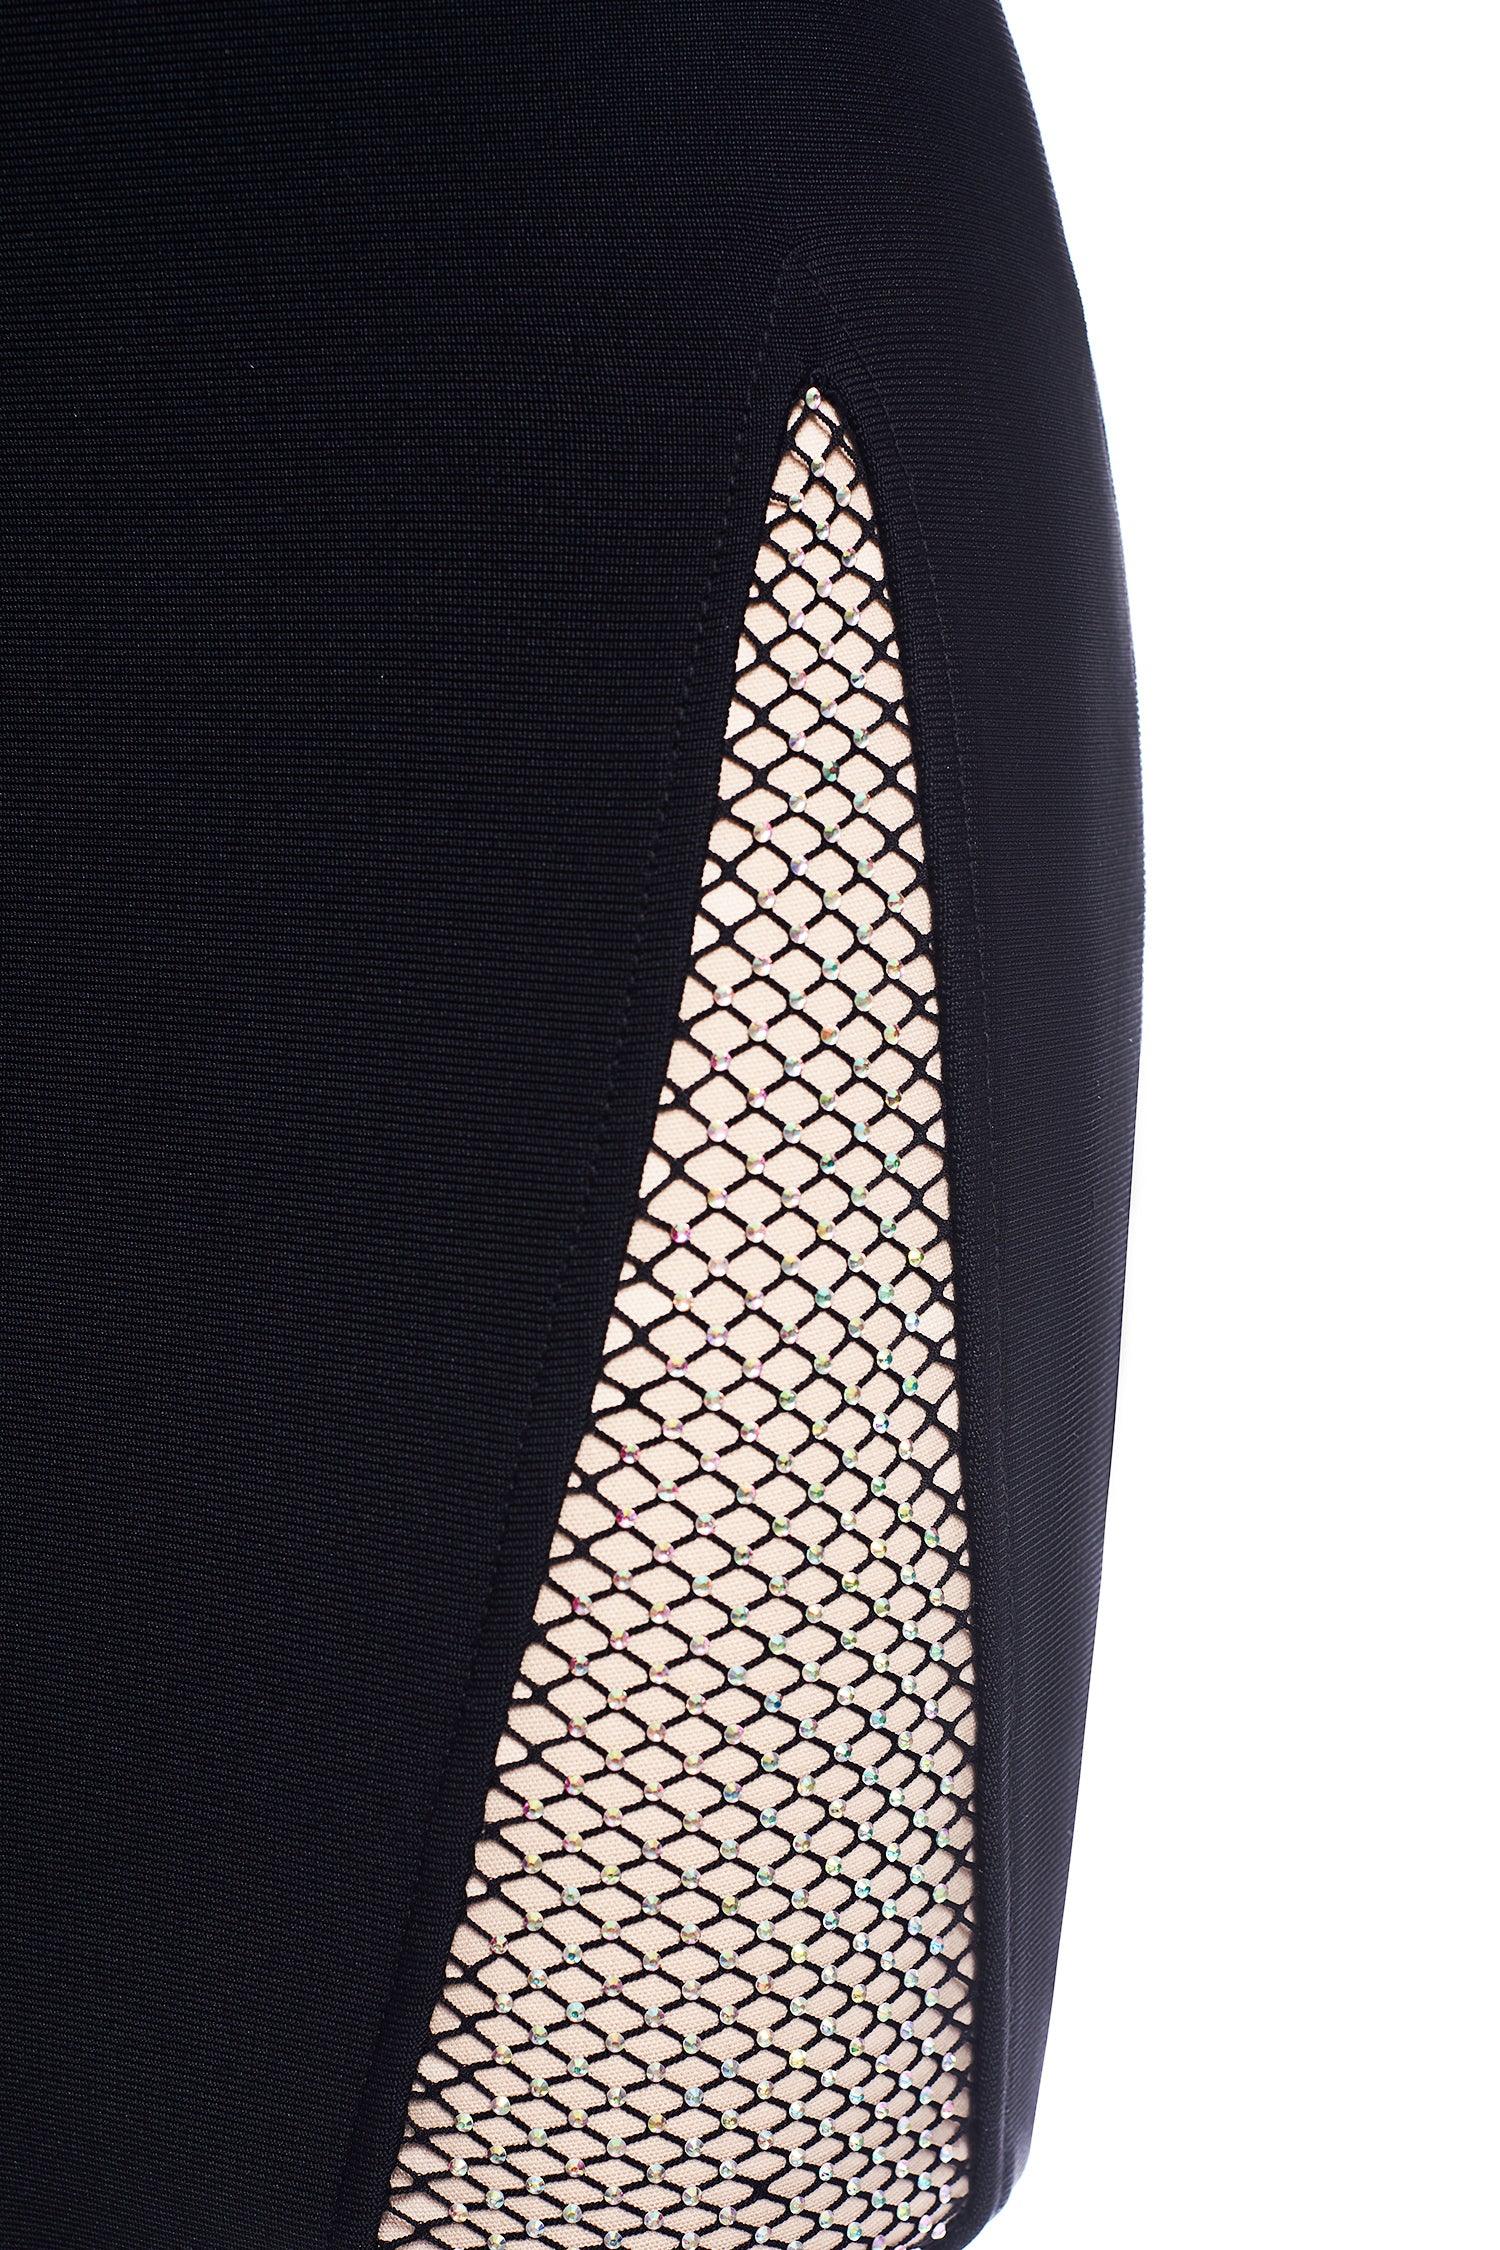 V Neck Bandage Bodycon Split Mini Dress - Classic Black - Bellabarnett